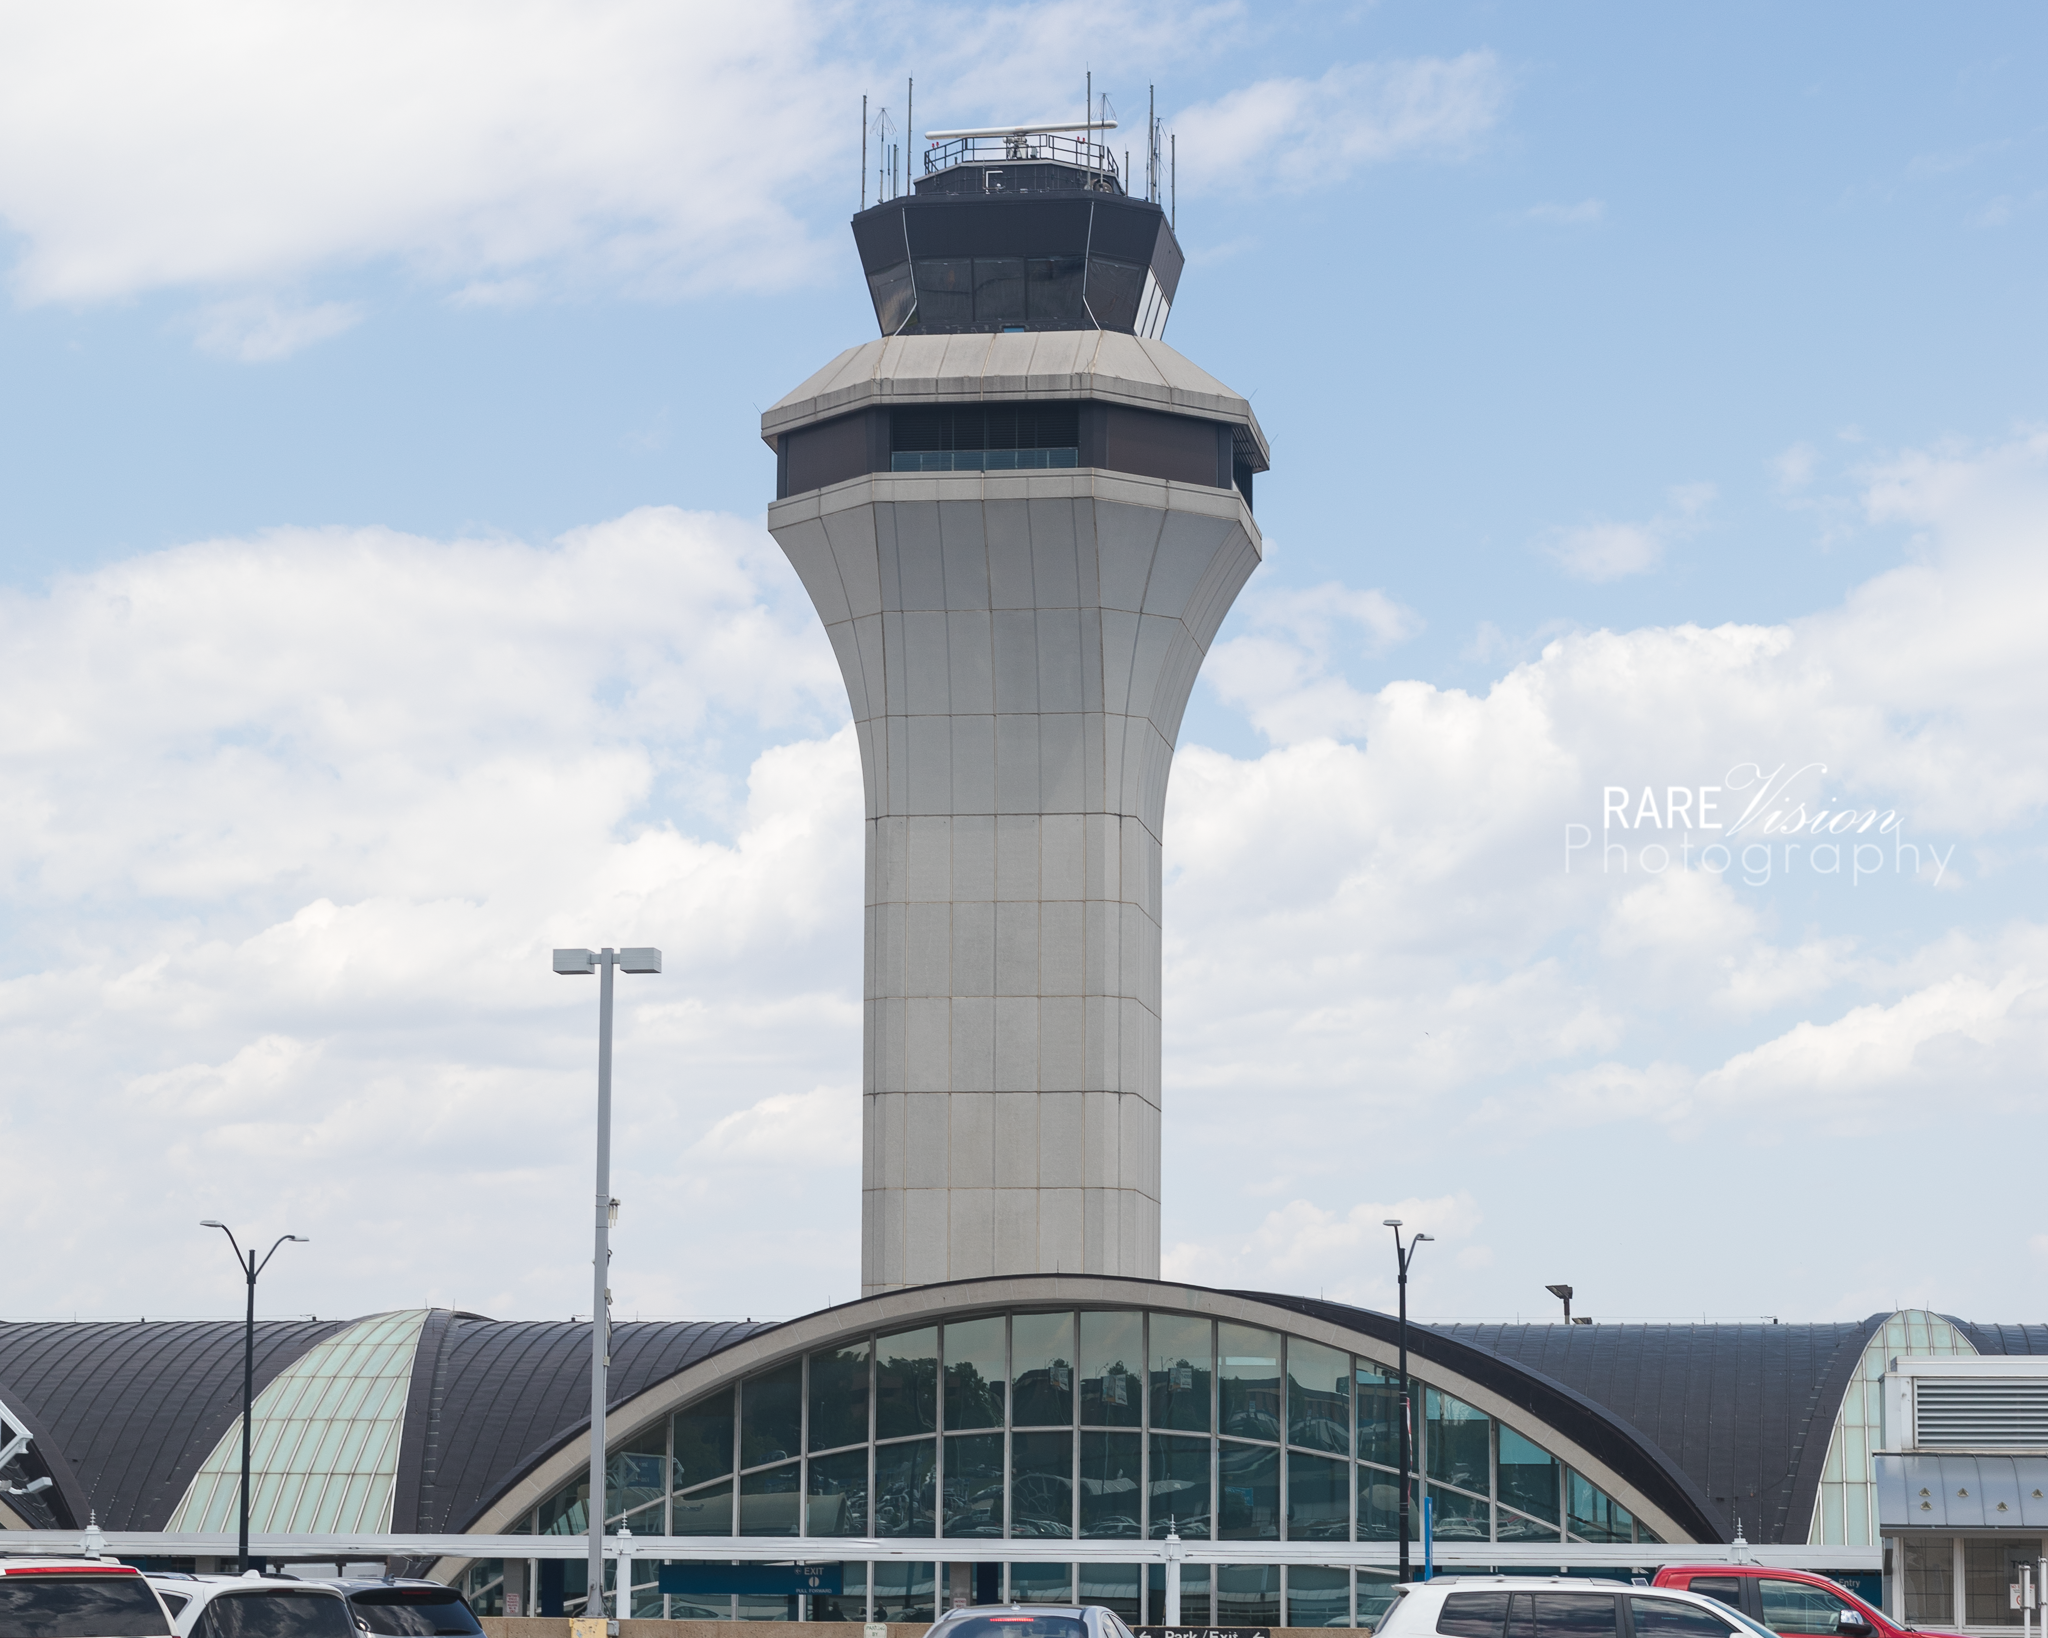 Image of the control tower at Lambert International Airport